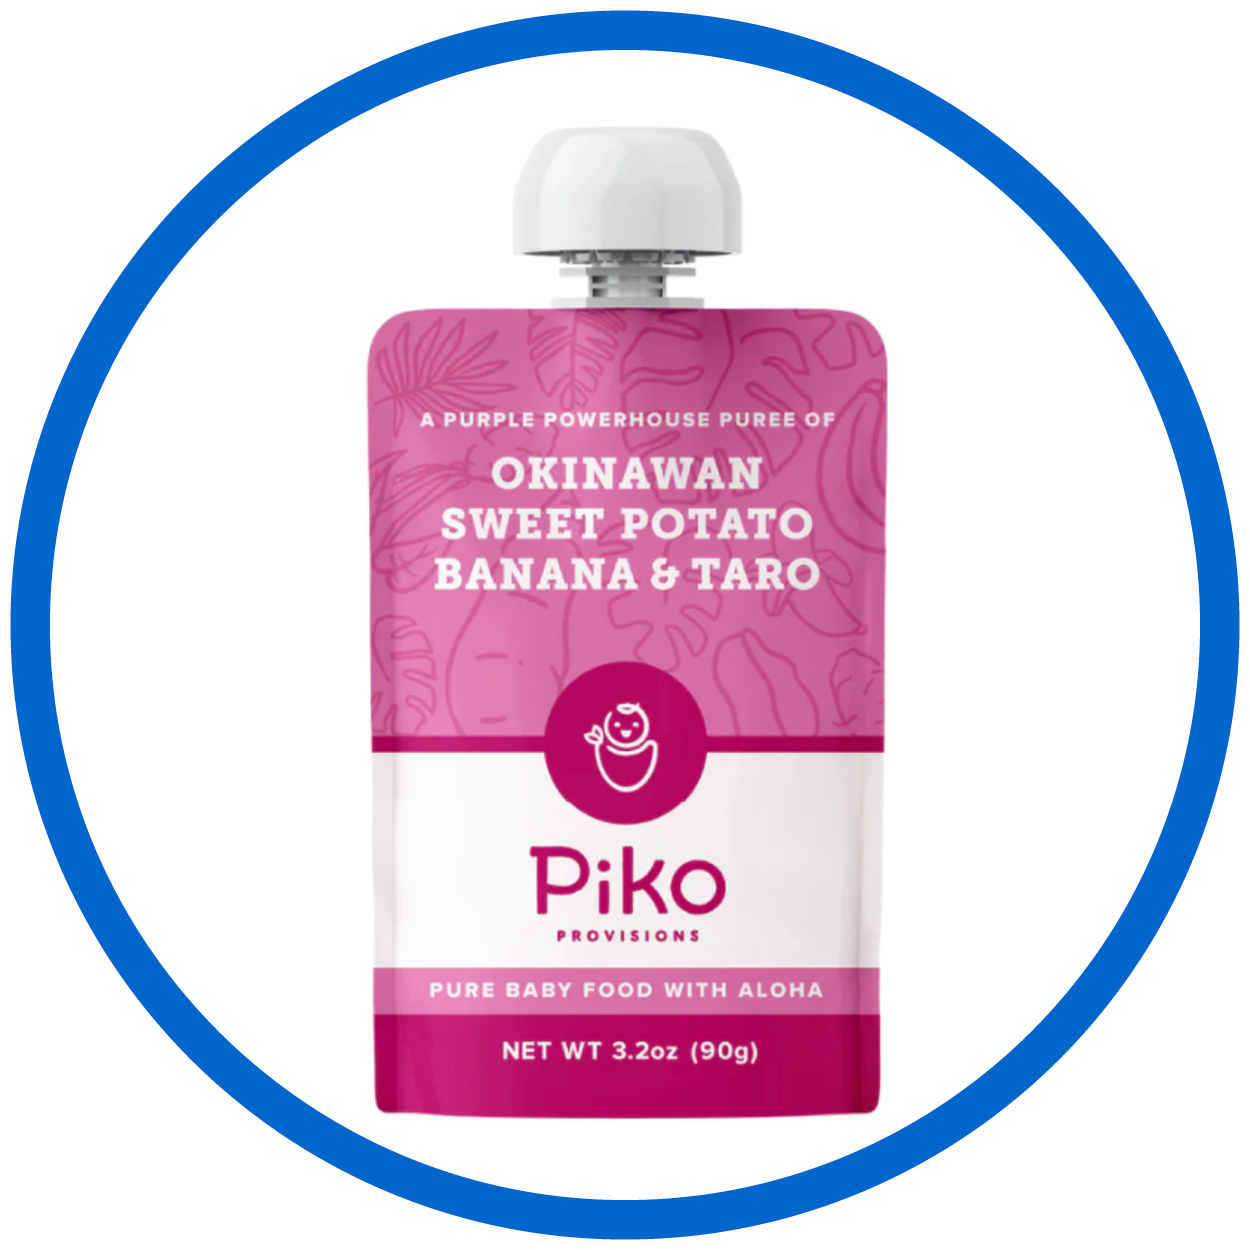 Okinawan Sweet Potato Banana & Taro flavored pink squeeze pouch.